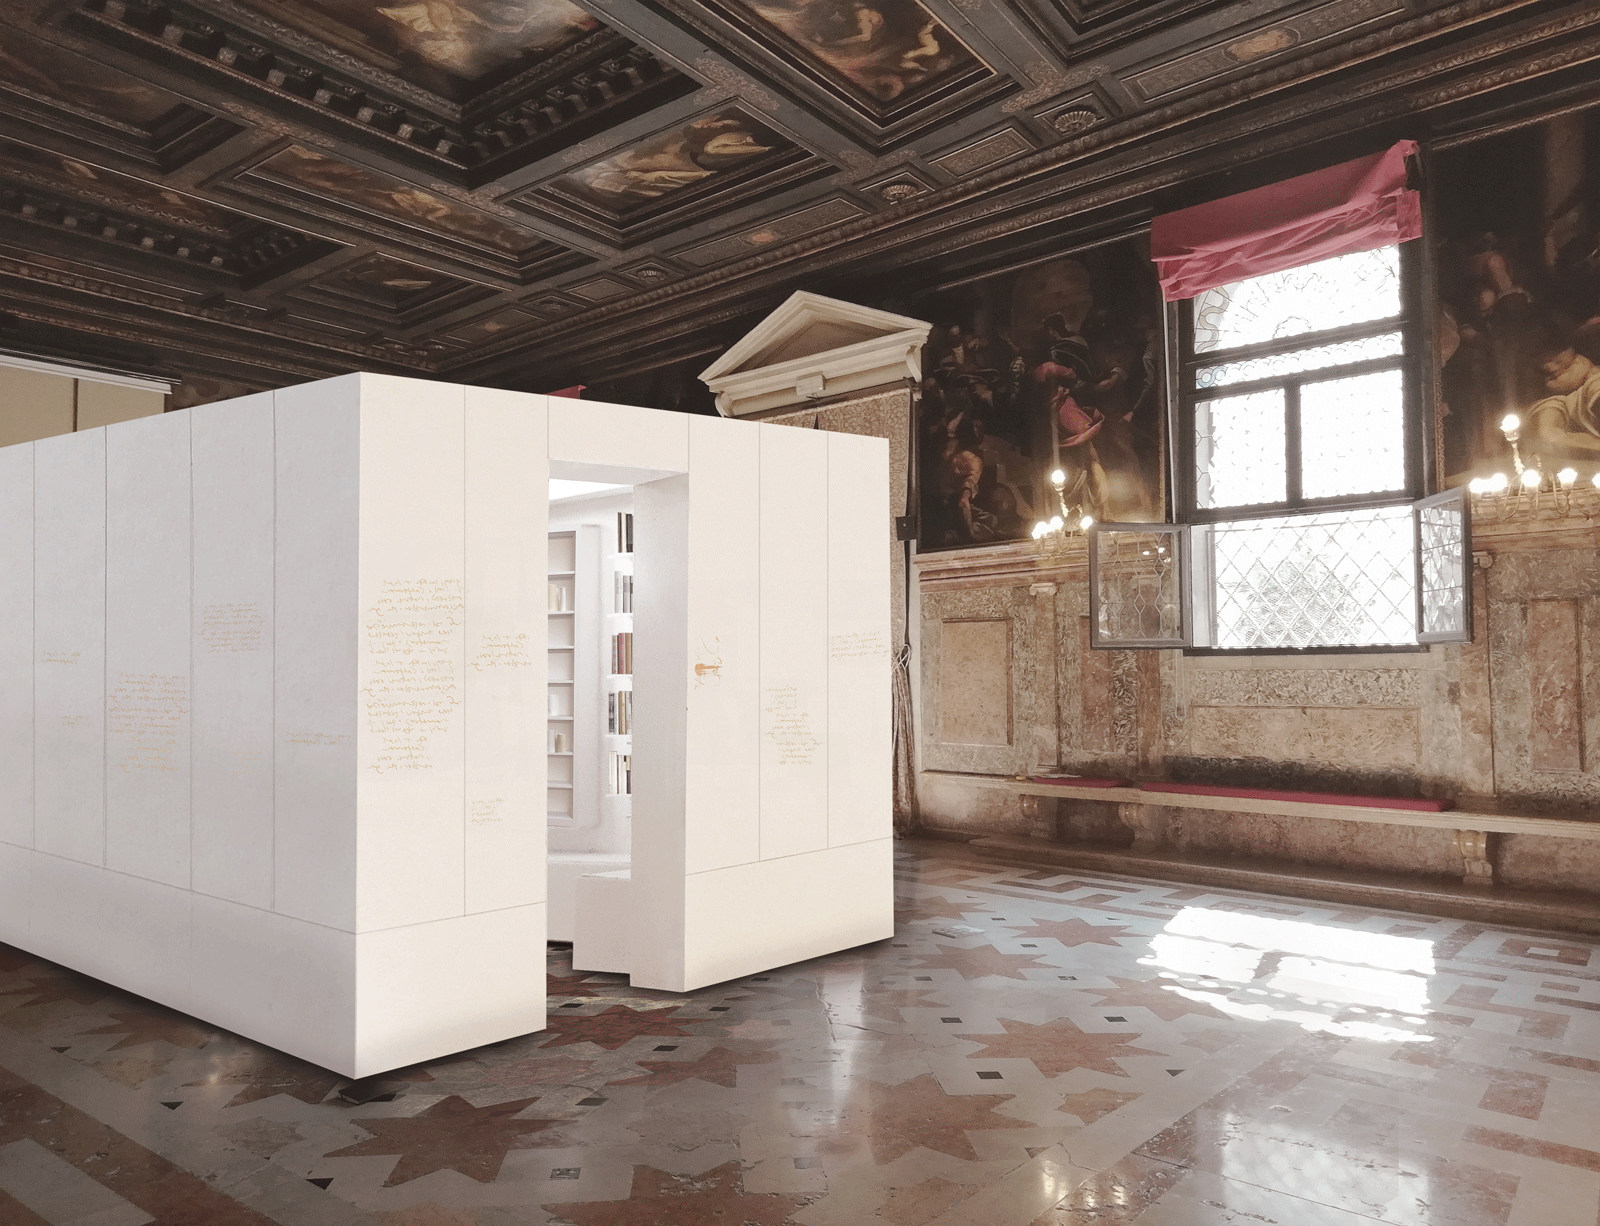 The proposed installation in the Ateneo Veneto © Edmund de Waal. Courtesy the artist